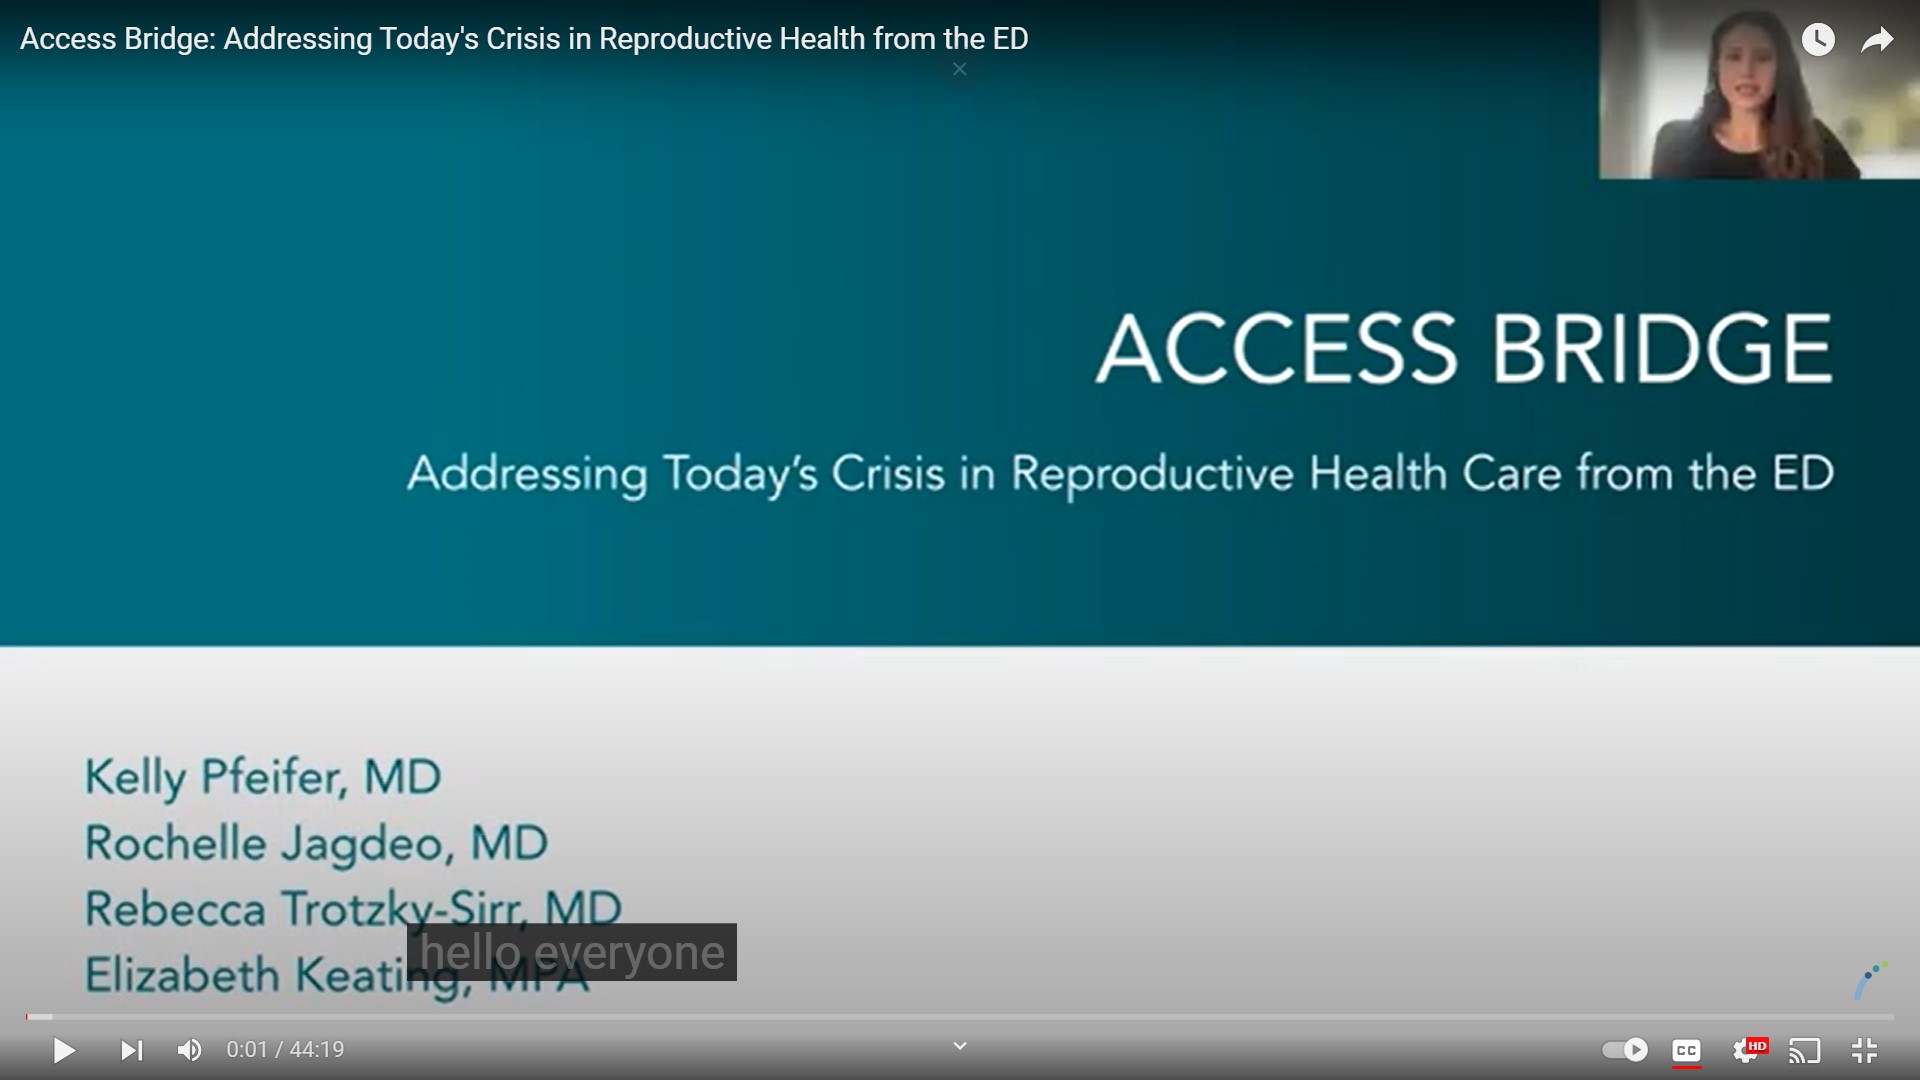 Screenshot from Access Bridge webinar